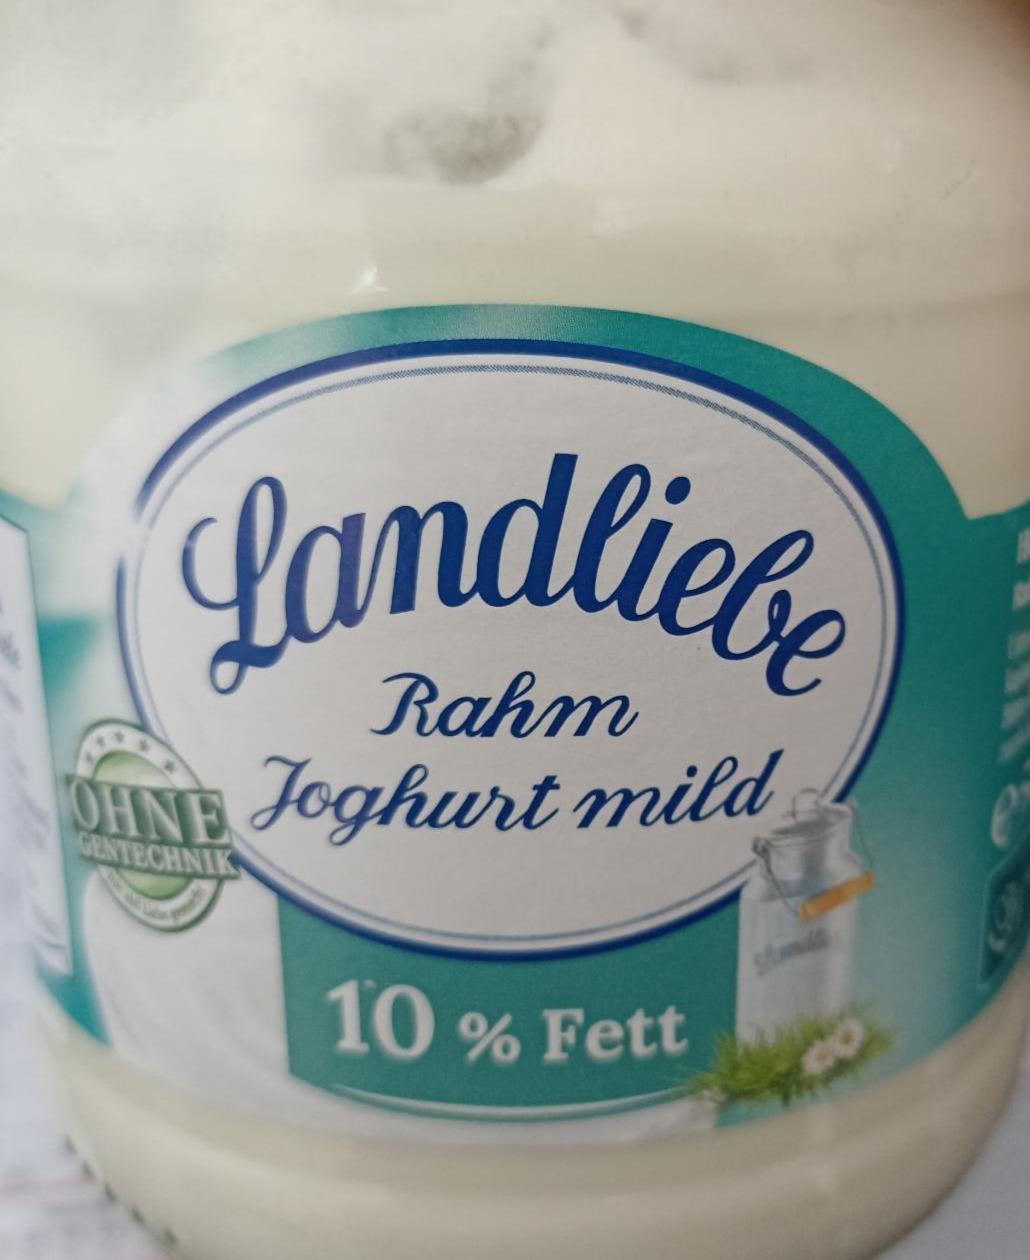 Fotografie - Rahm joghurt mild 10% fett Landliebe